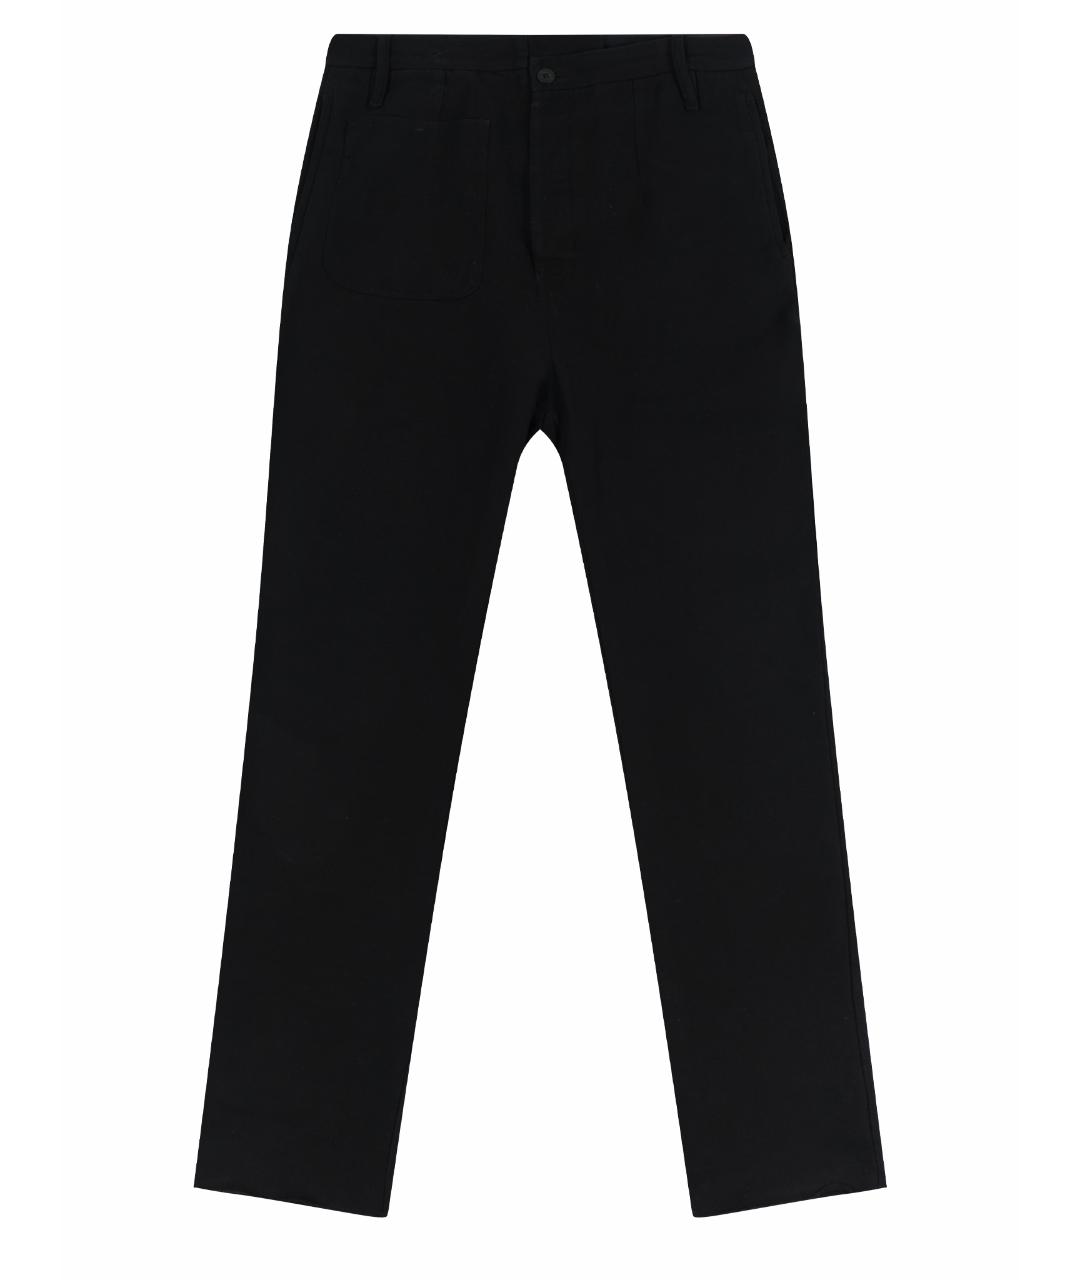 LOST & FOUND RIA DUNN Черные хлопковые брюки чинос, фото 1